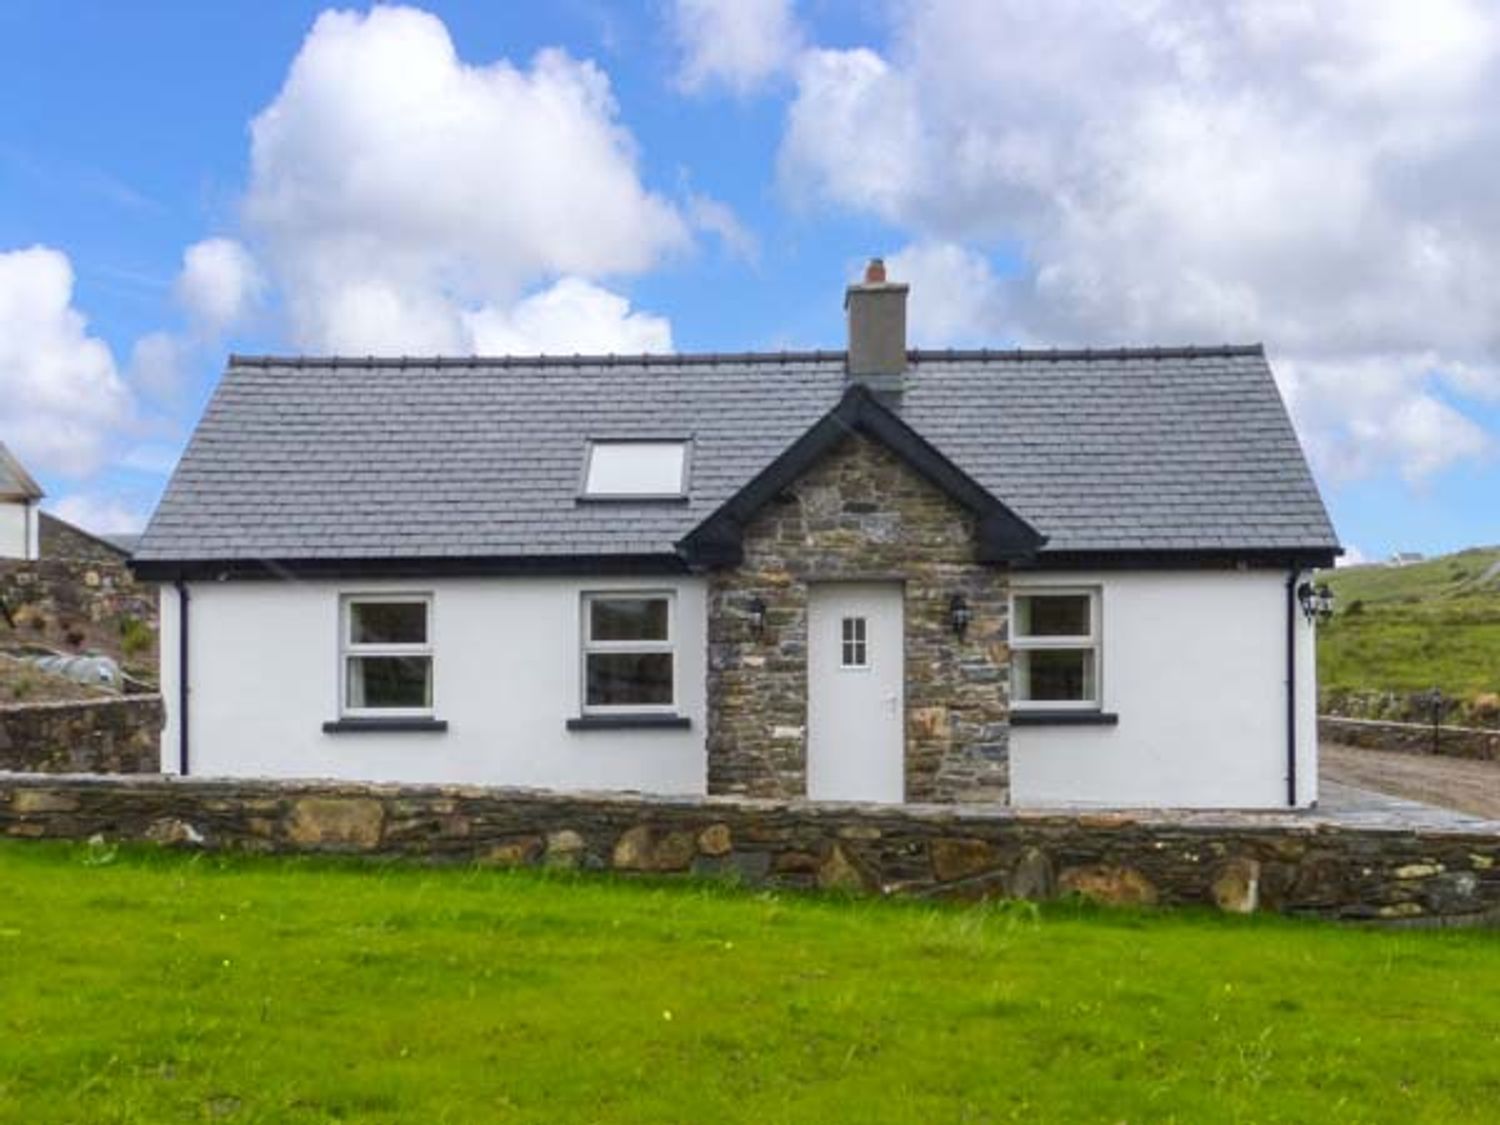 Farmhouse - County Clare - 925545 - photo 1